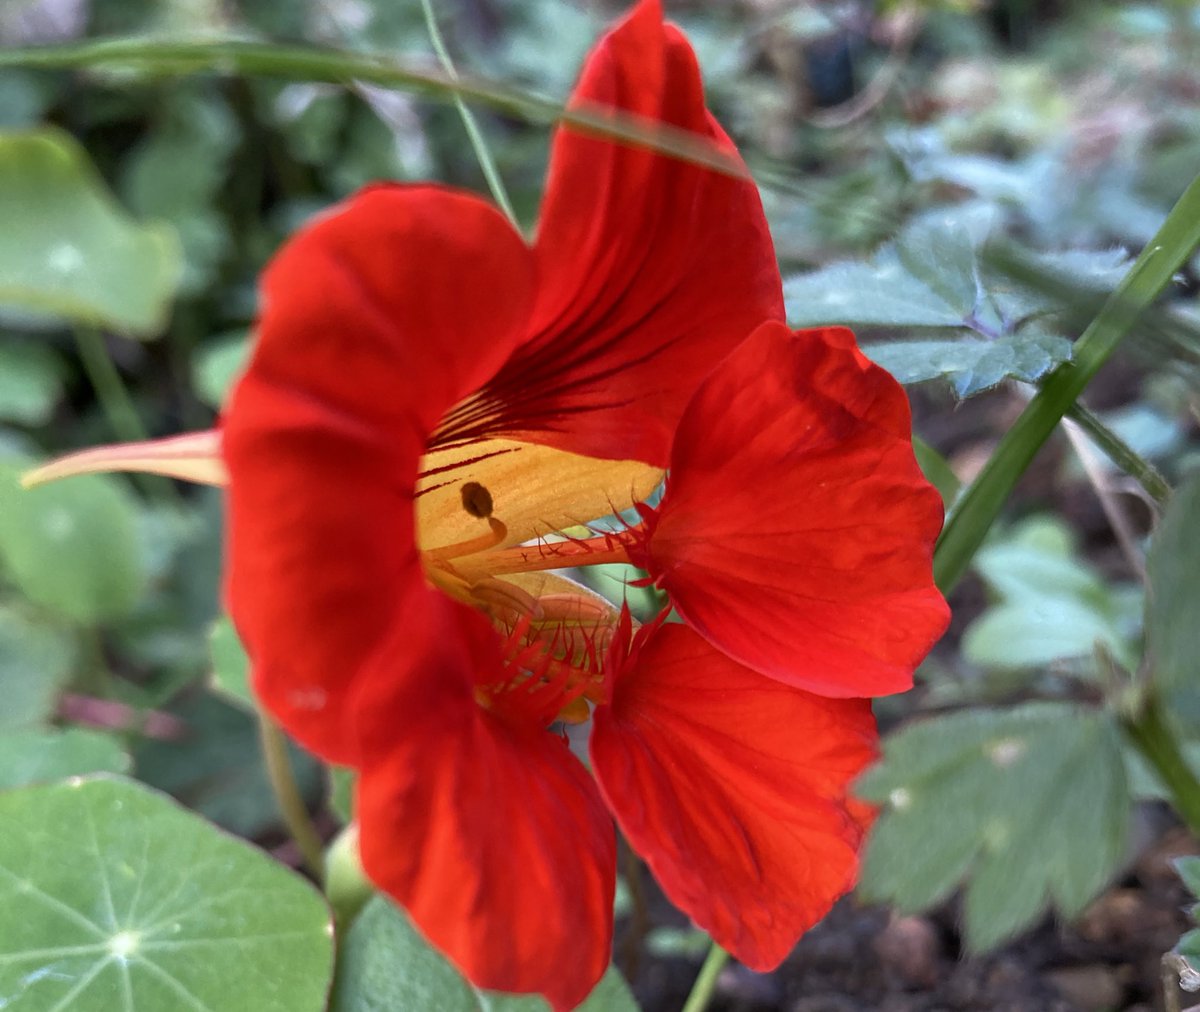 One Nasturtium left. But a beautiful one ♥️♥️♥️

#nannysgardenworld 

#nasturtium #nasturtiums #flowers #garden #sundayflowers #flowerhunting #edibleflowers #prettyflower #photography #PhotoOfTheDay